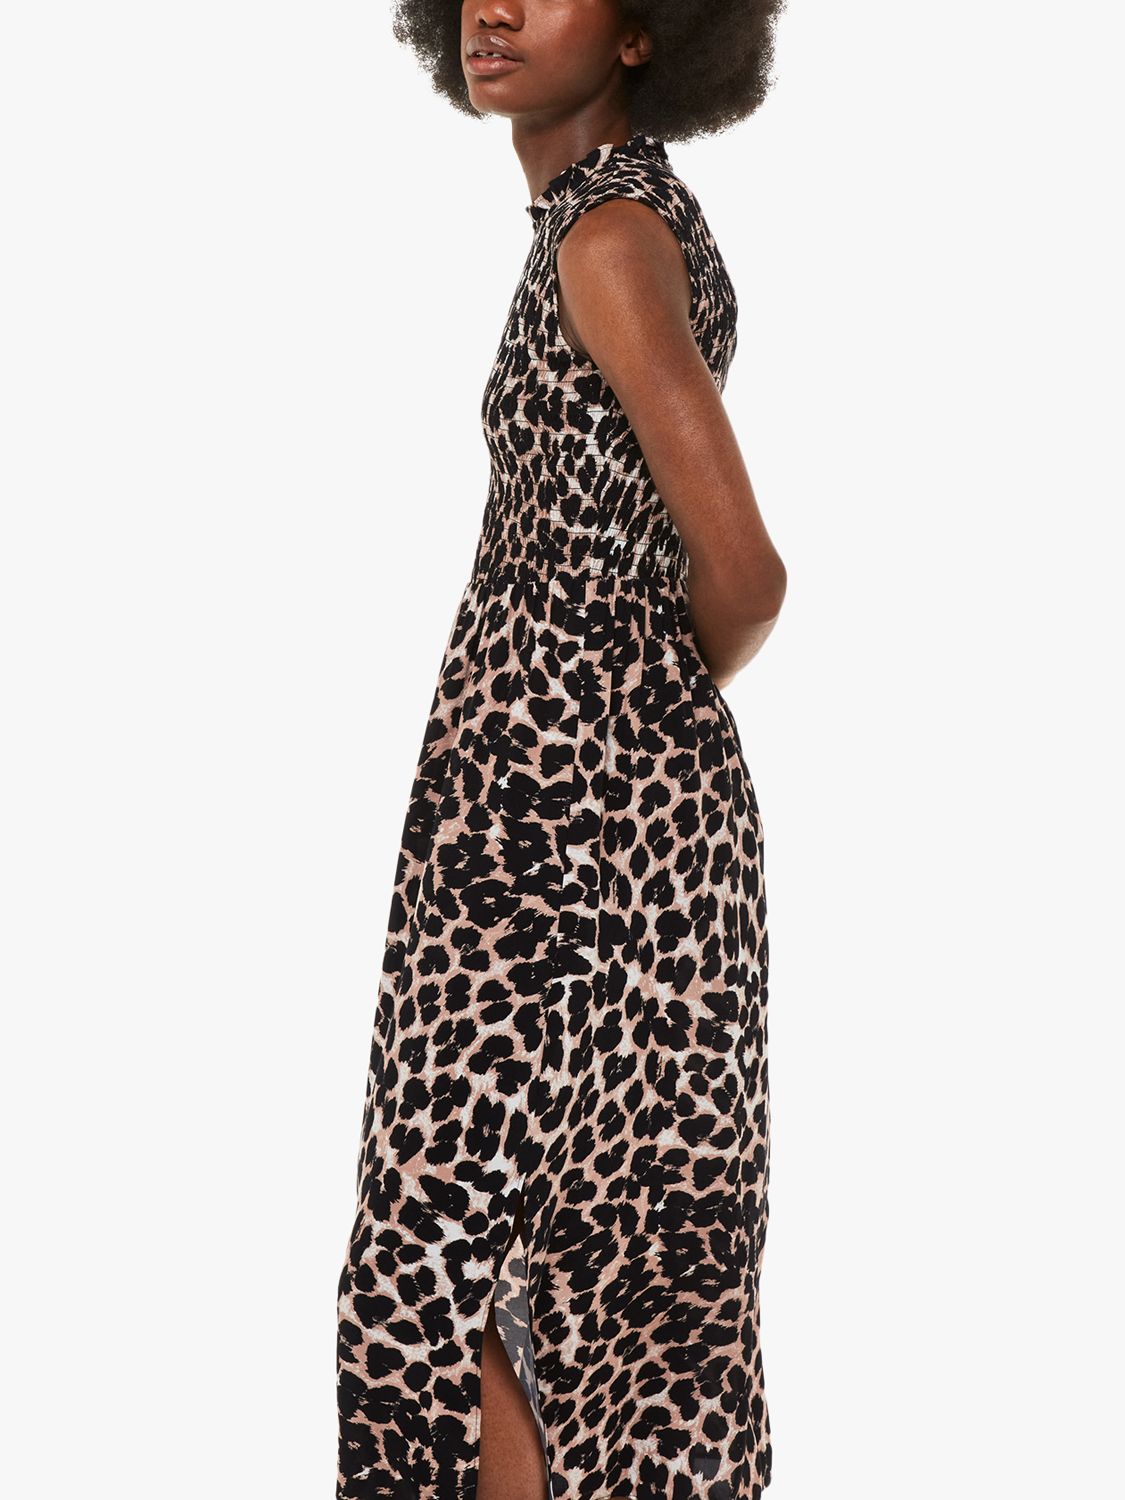 Whistles Heidi Leopard Print Midi Dress, Brown/Multi, 6